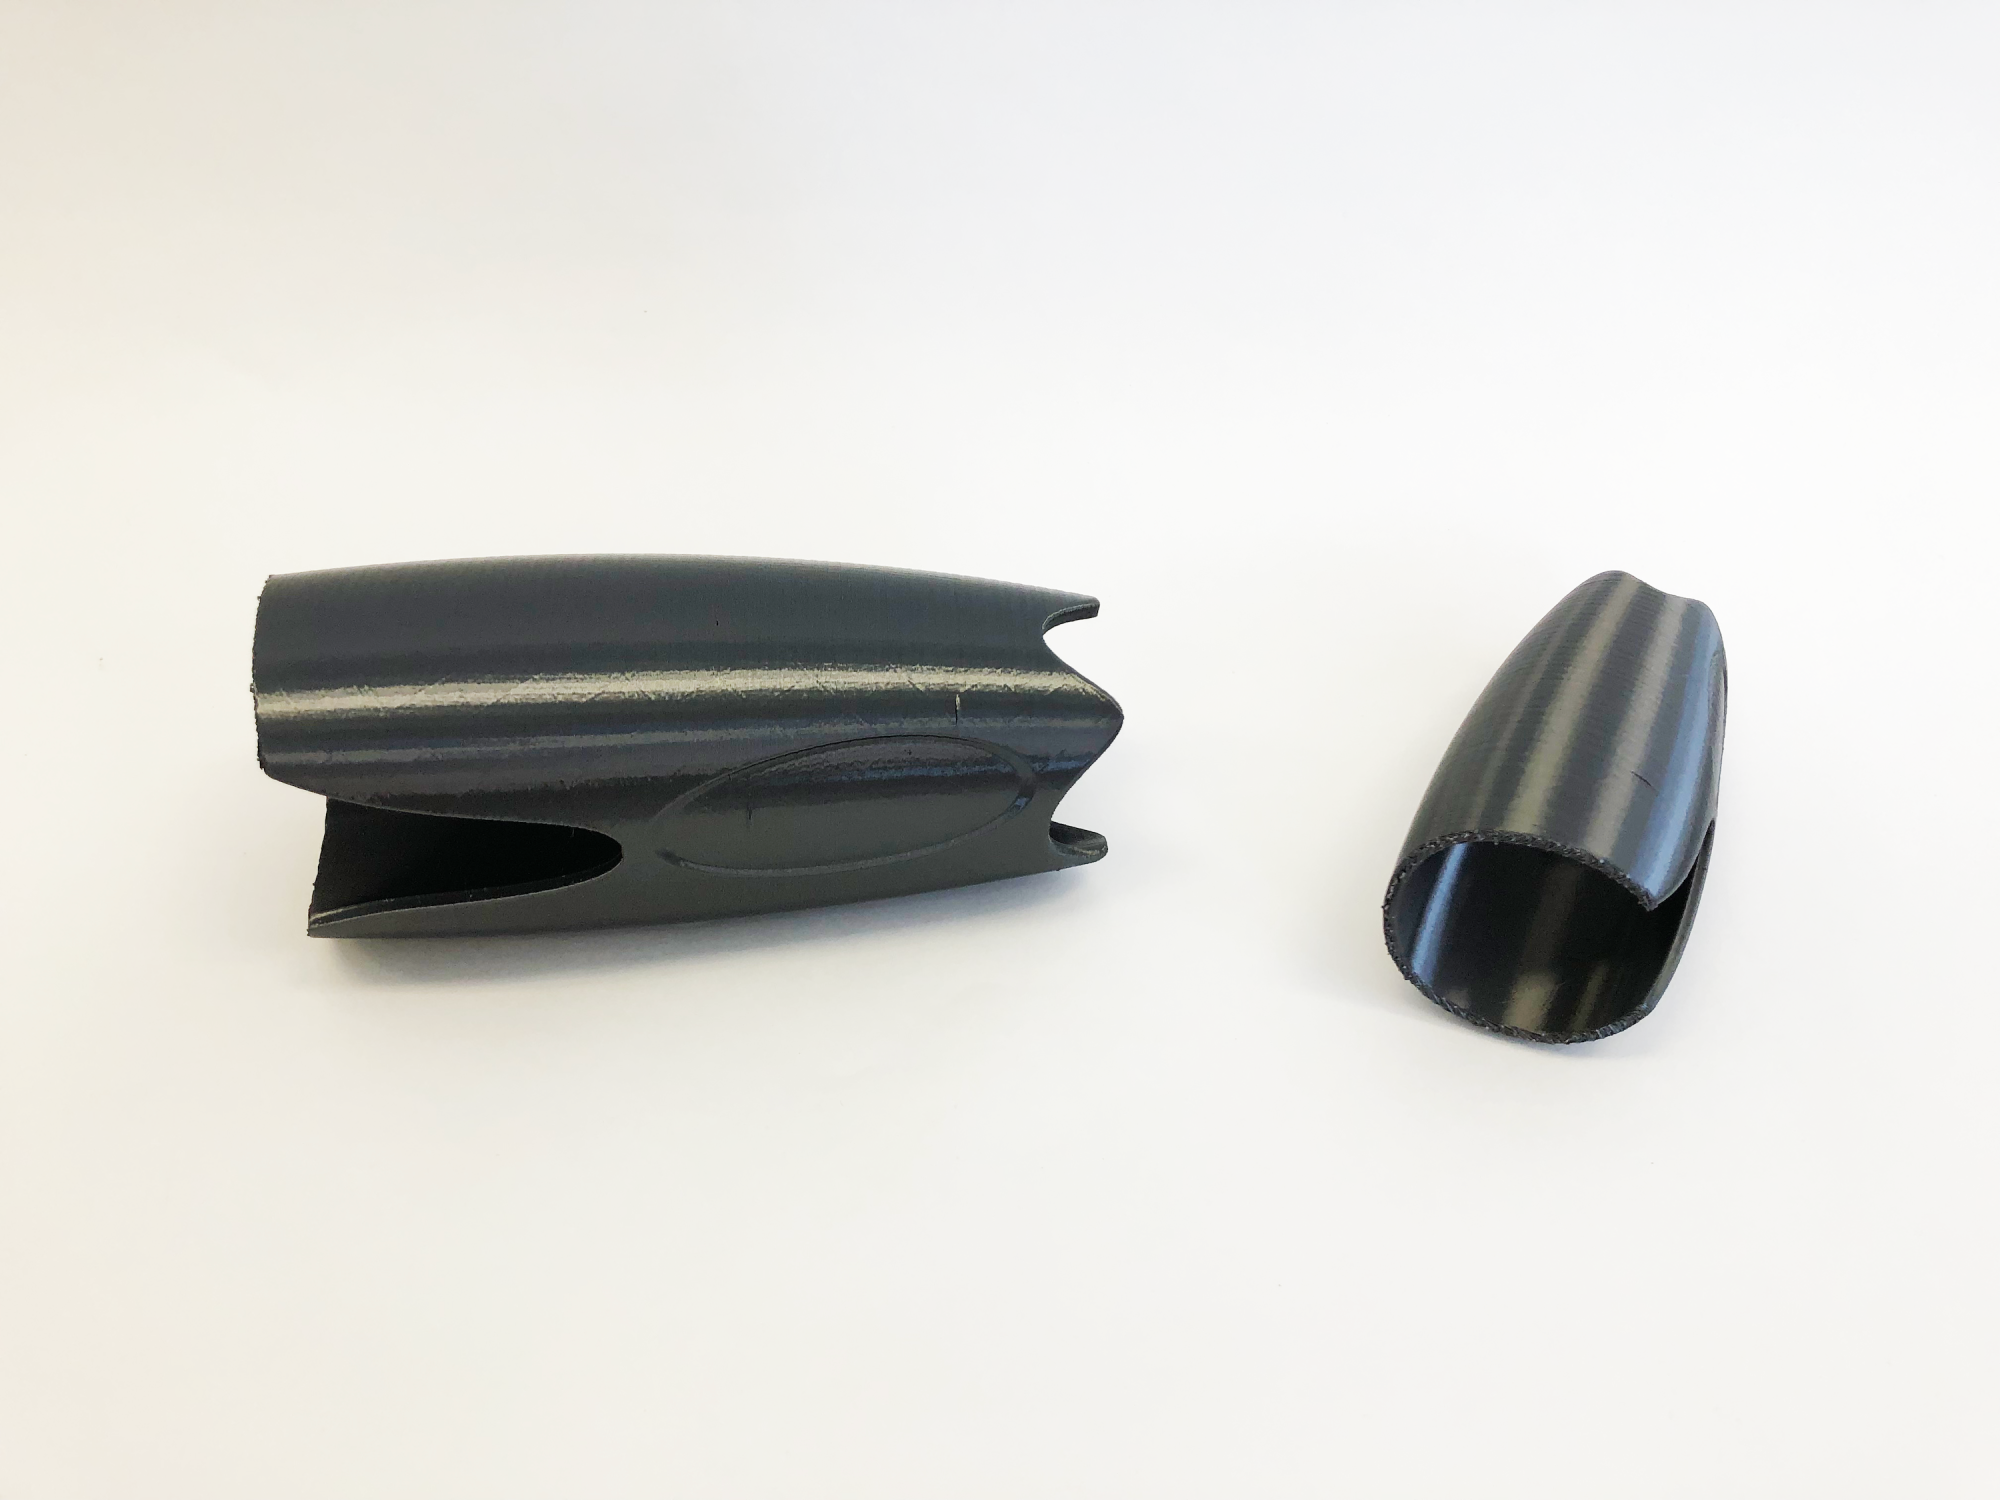 3D printed black prototype of MyKid-netic child surveillance device designed by Chloe Kim